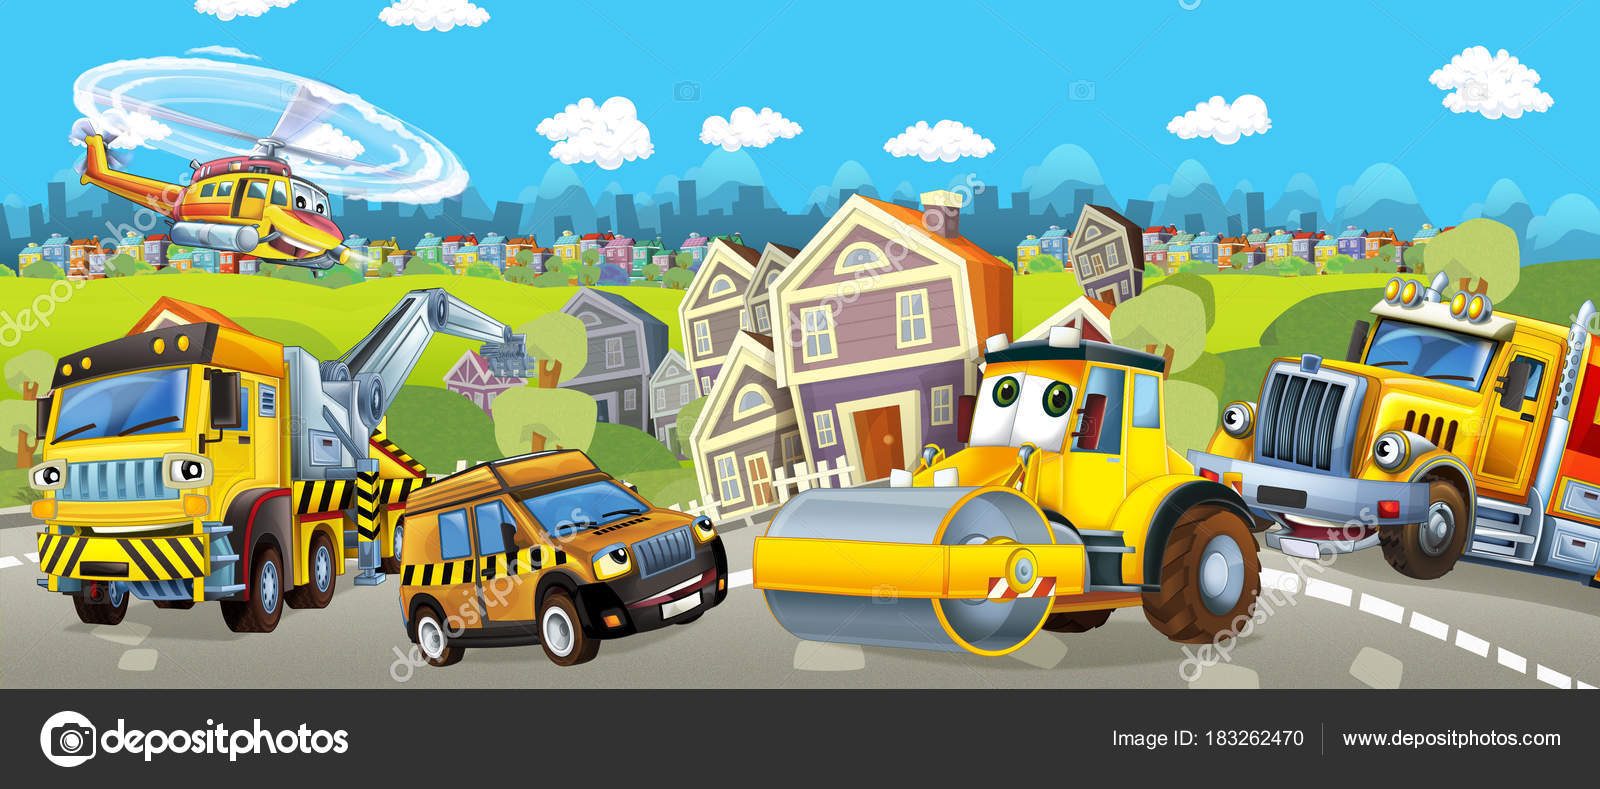 Cartoon Tow Truck Road Roller Pilot Car Illustration Children Stock Photo  by ©illustrator_hft 183262470